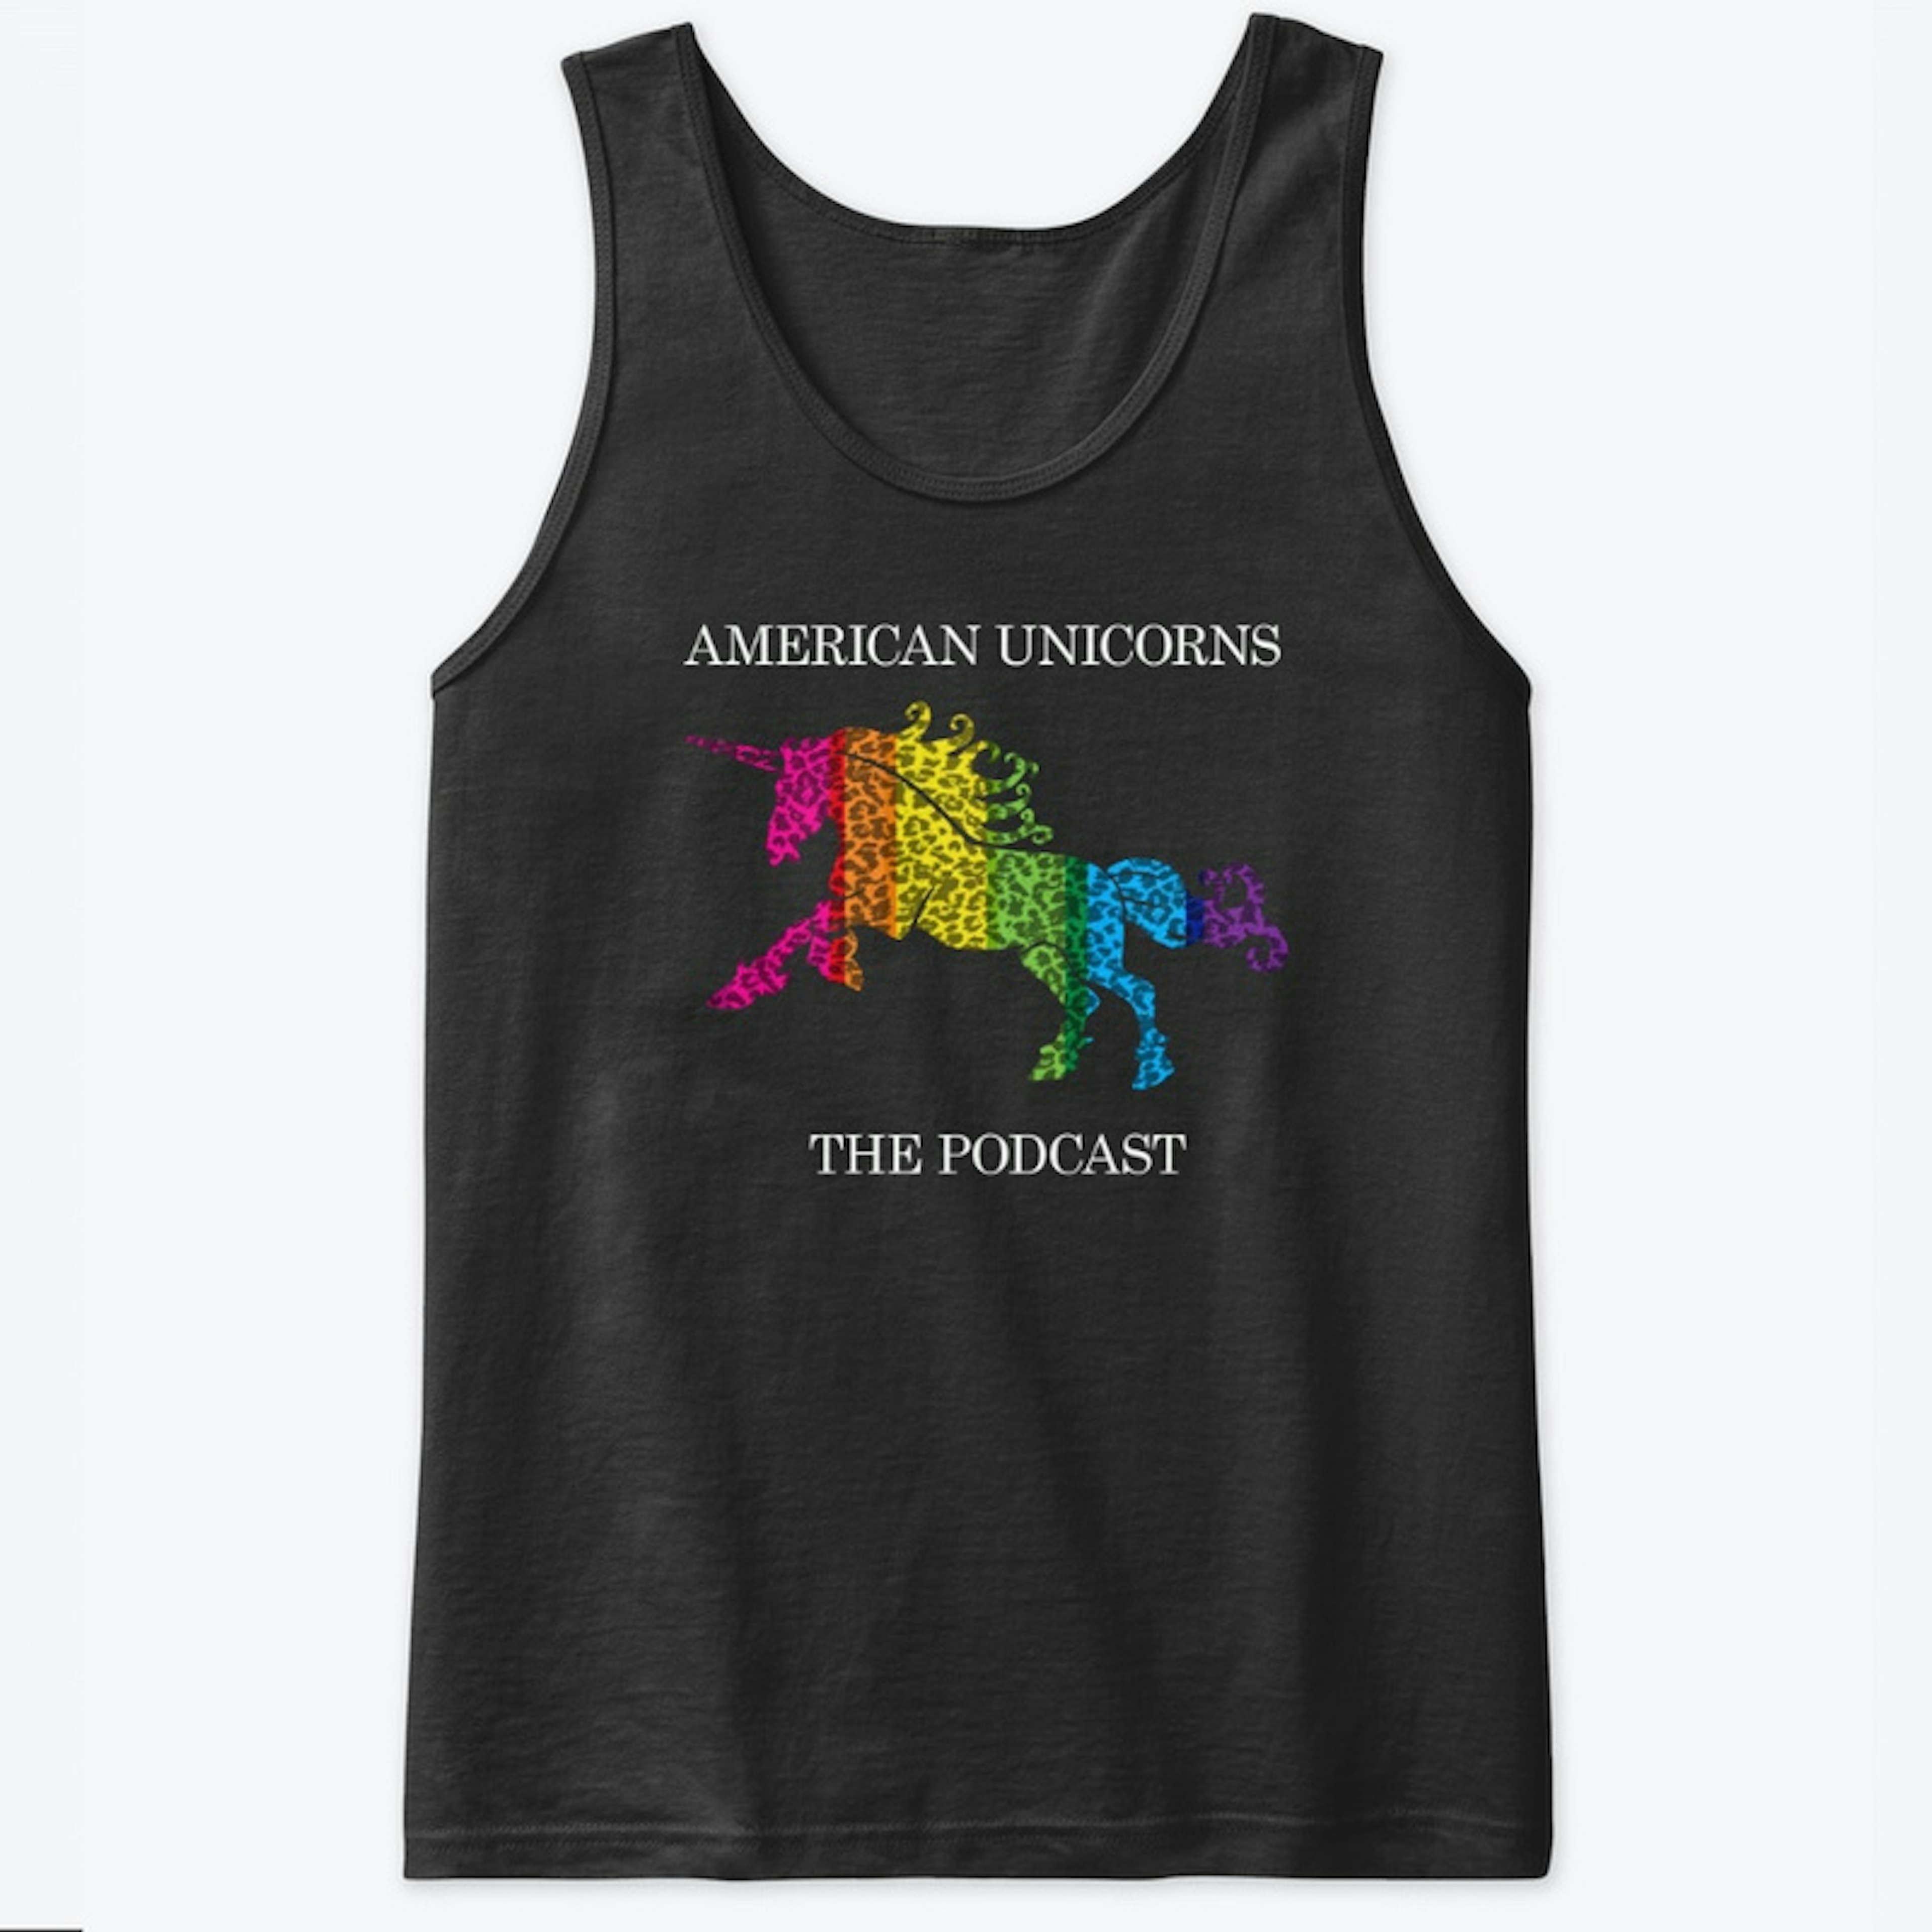 American Unicorns: Rainbow Edition!